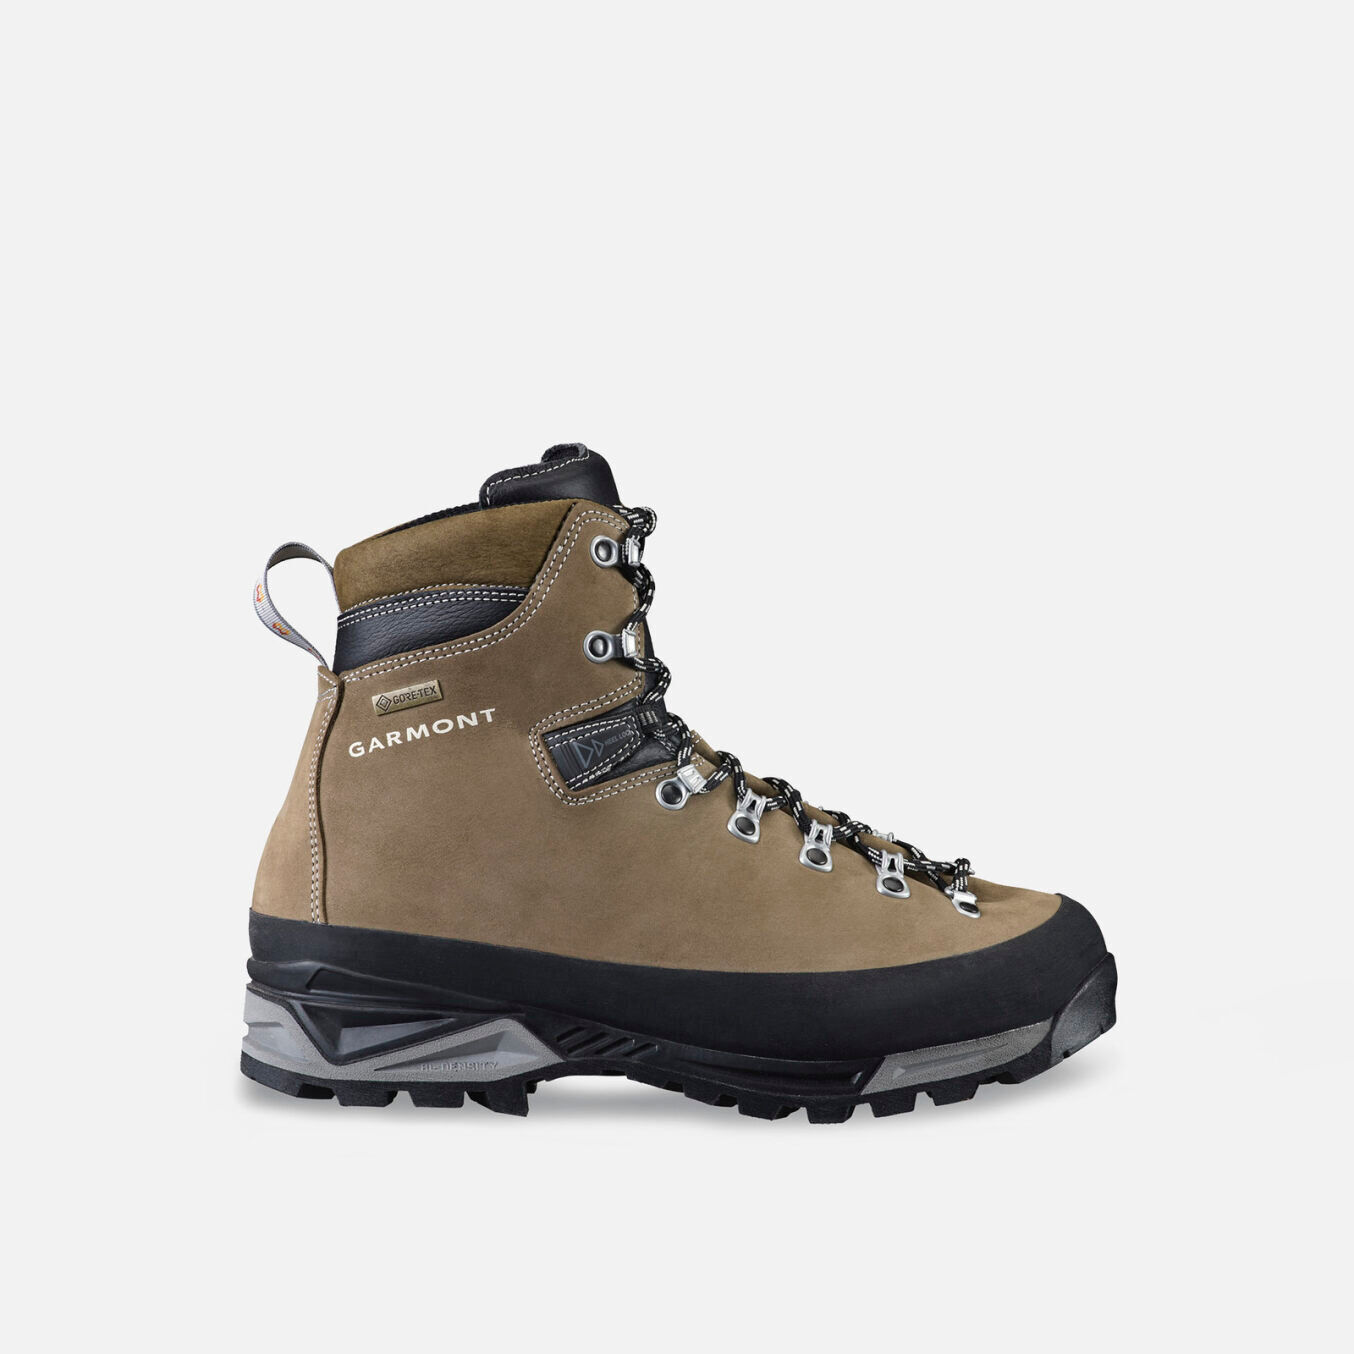 Garmont Dakota Lite GTX  - Hiking boots - Men's